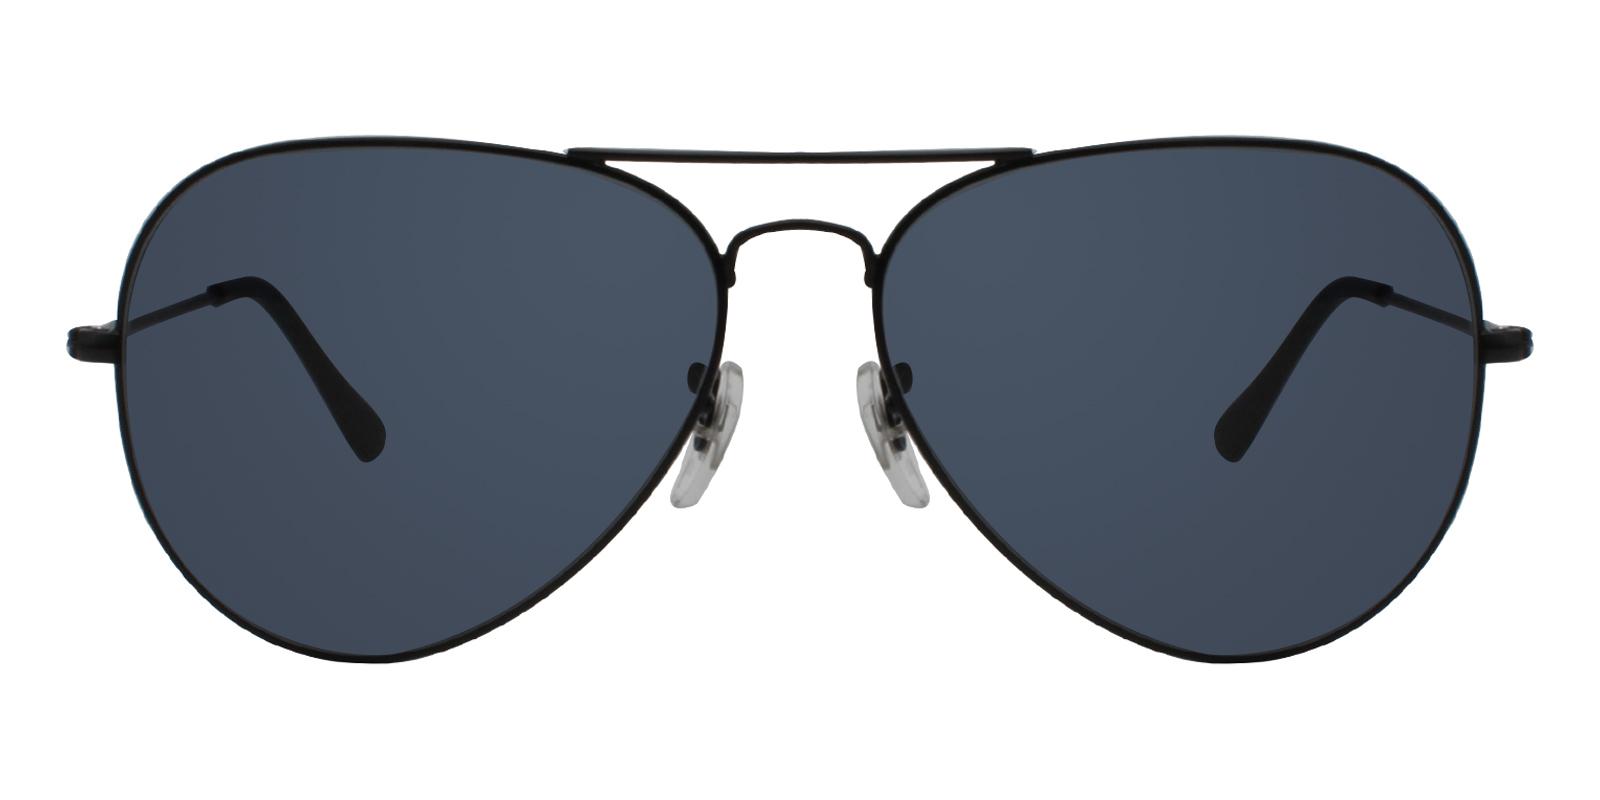 Harbor Black Metal Lightweight , NosePads , Sunglasses Frames from ABBE Glasses